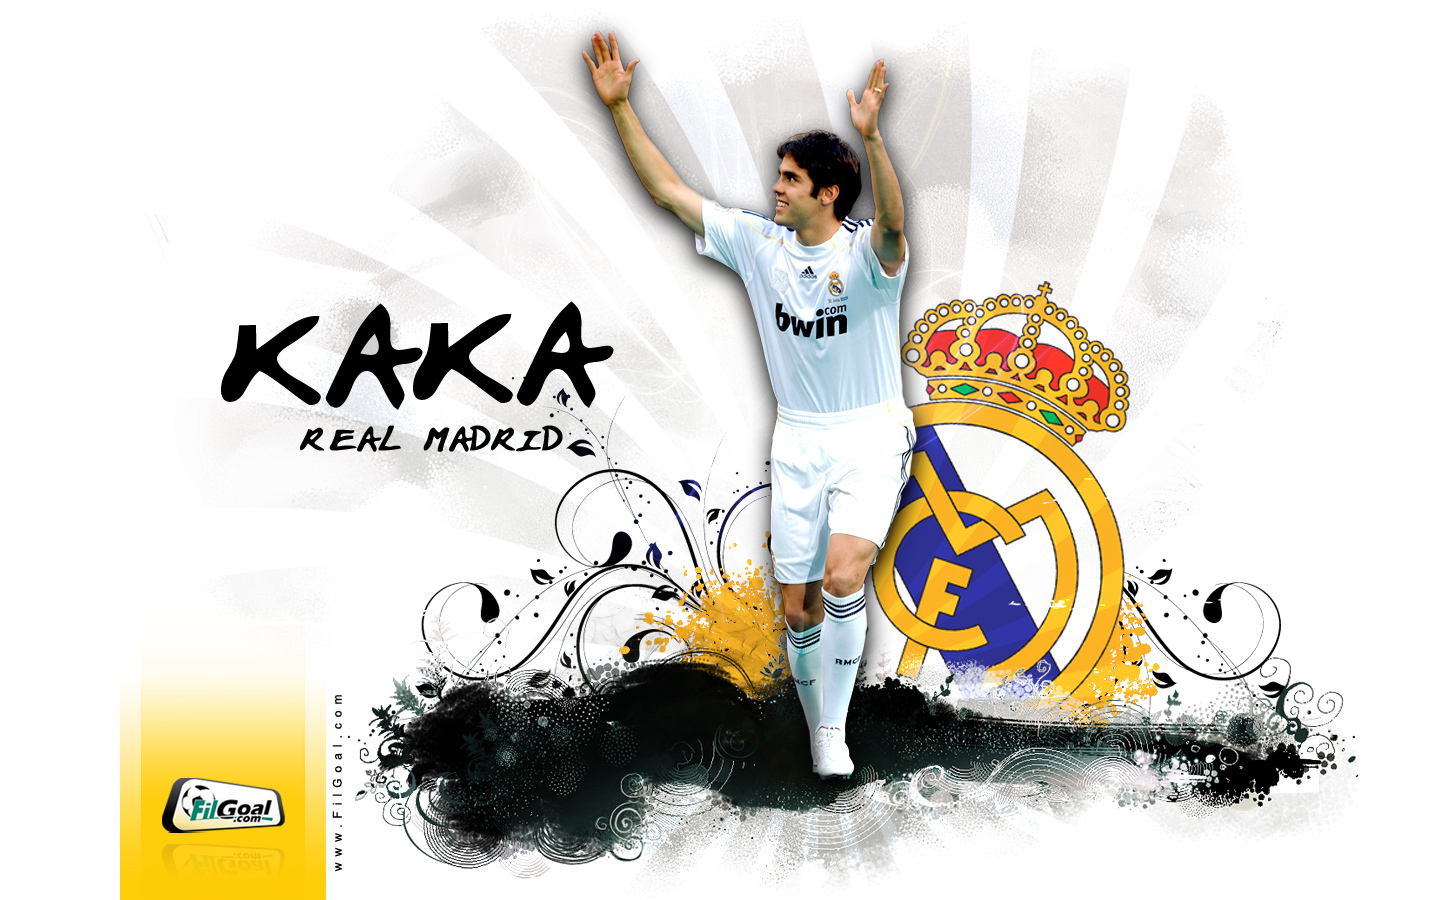 صور أبطال ريال مدريد.....ملوك إسبانيا Kak-Real-Madrid-ricardo-kaka-9204910-1440-900